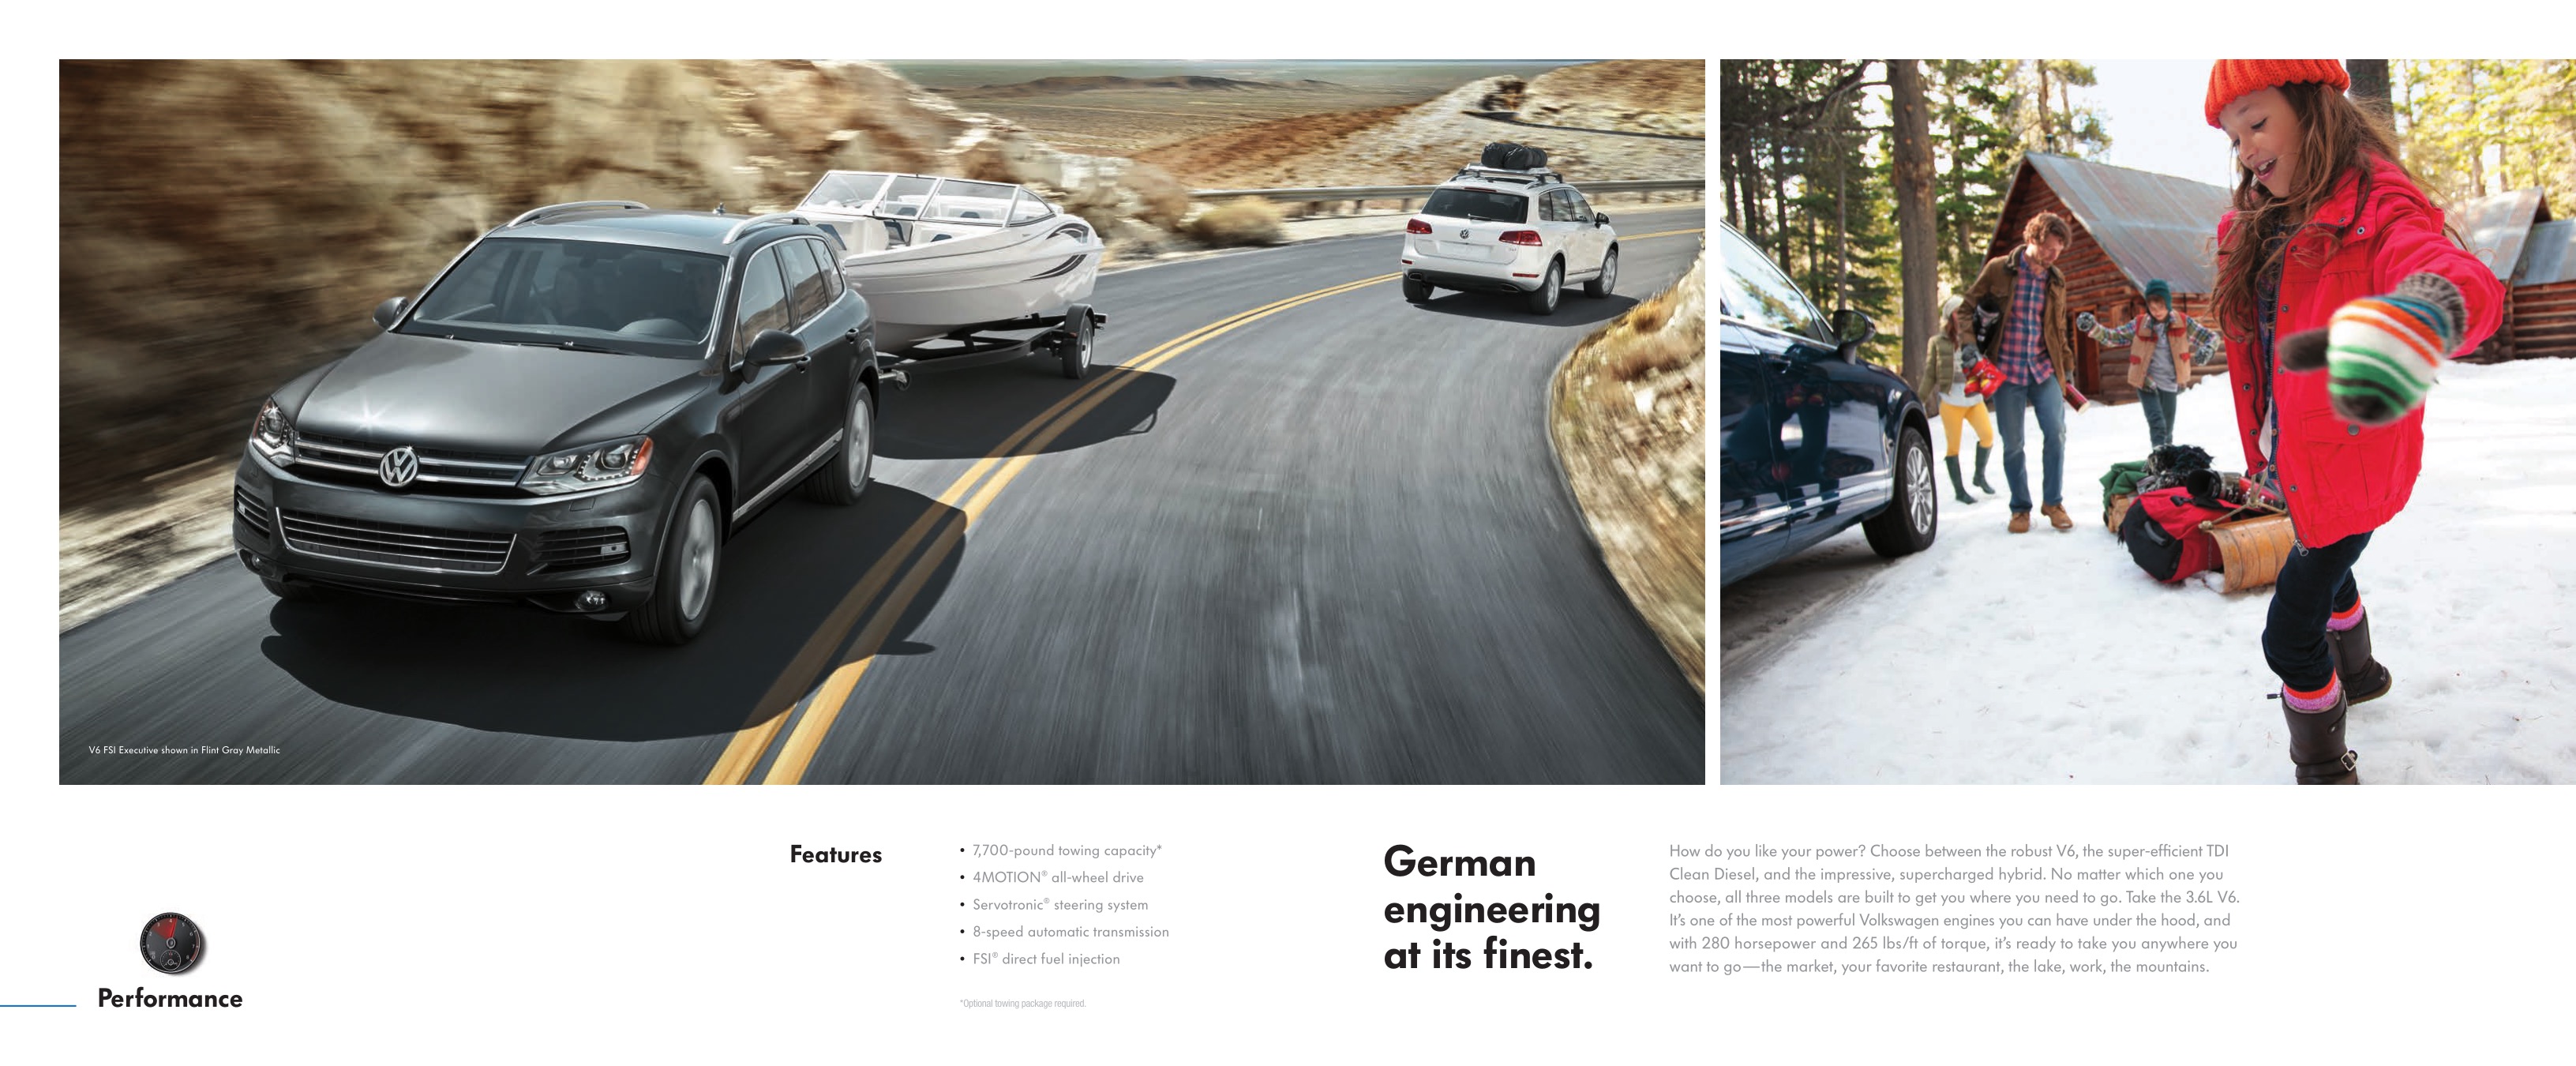 2013 VW Touareg Brochure Page 1